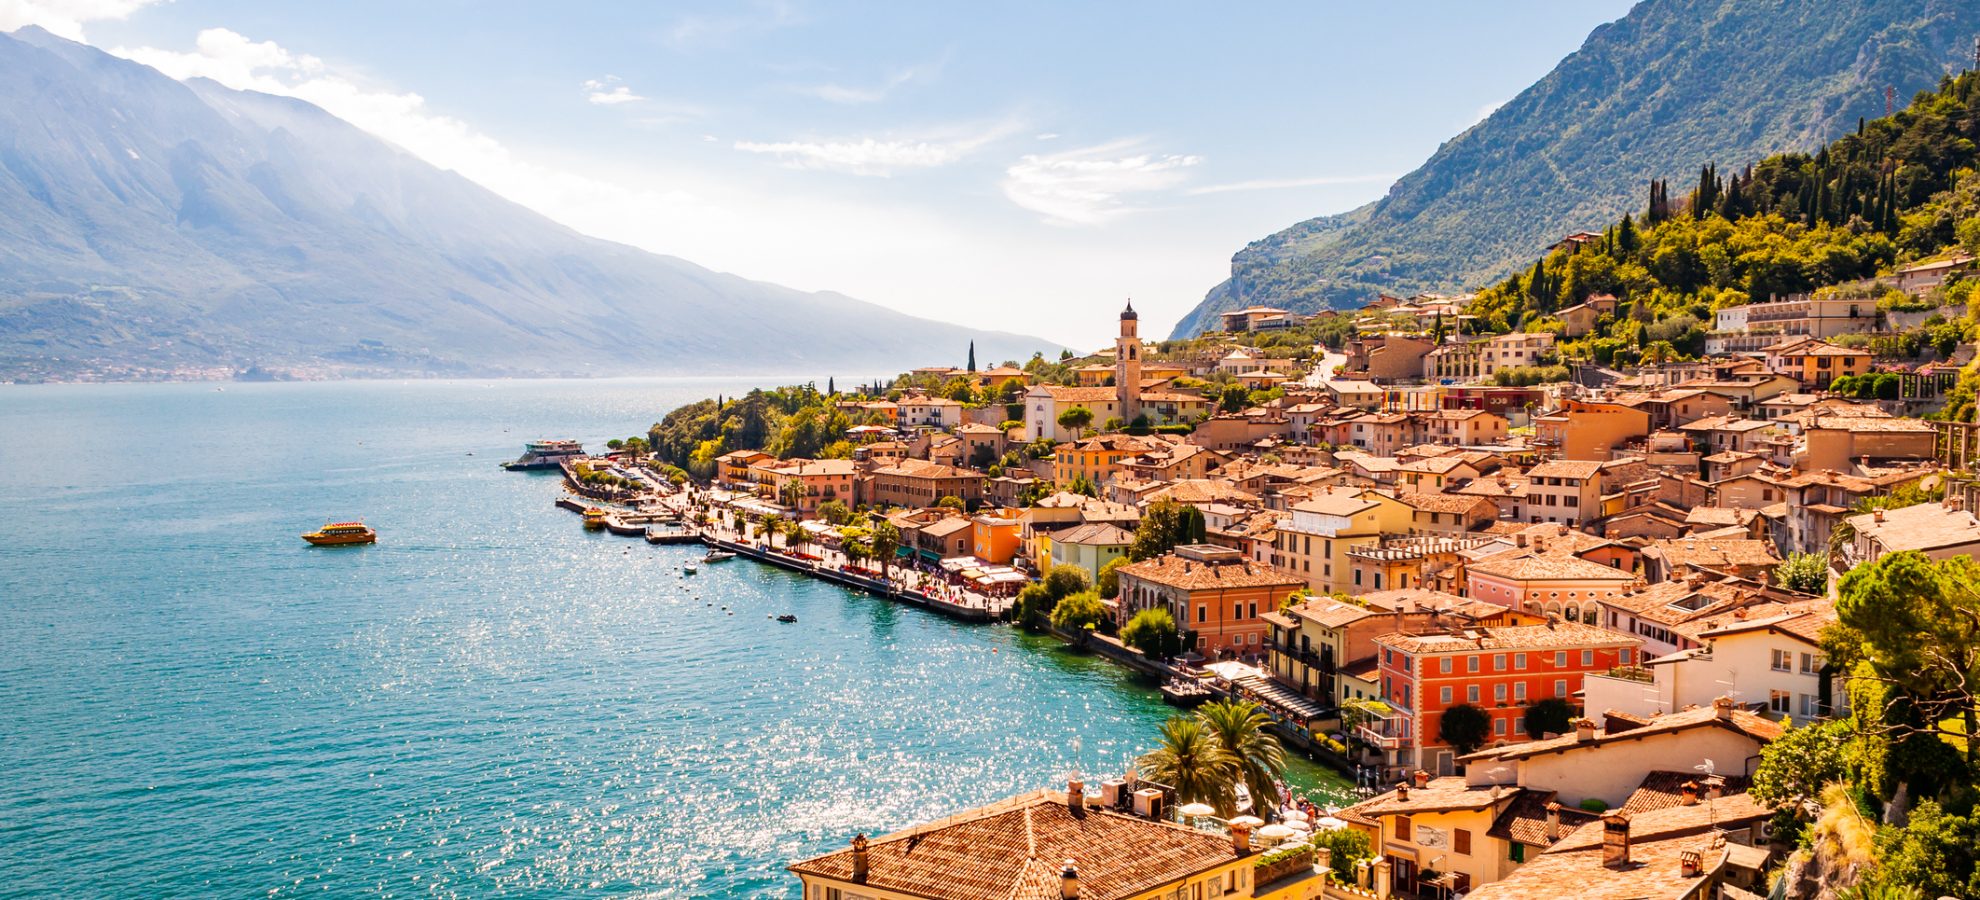 Limone Sul Garda cityscape on the shore of Garda lake surrounded by scenic Northern Italian nature